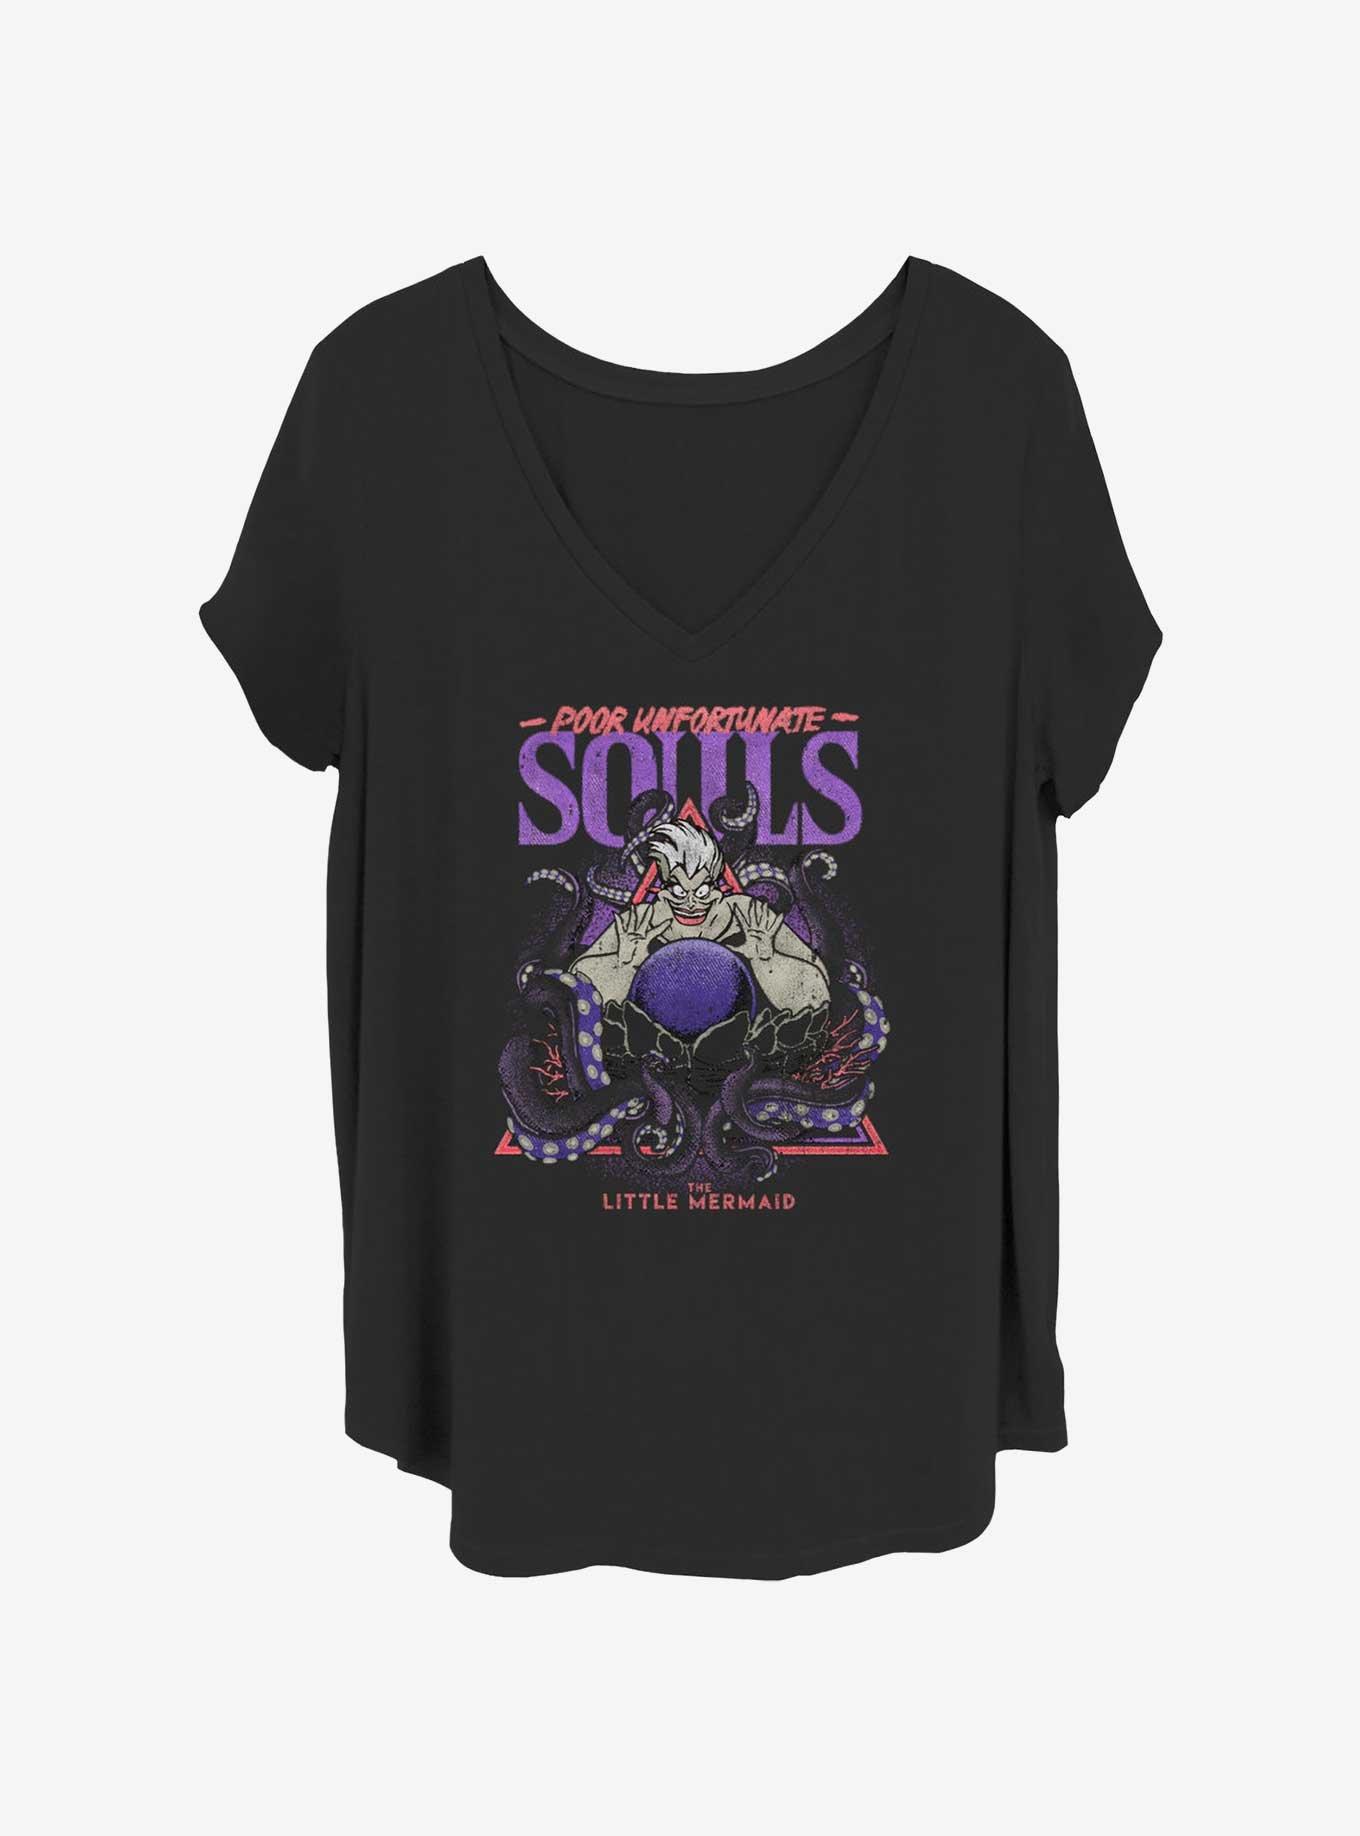 Disney The Little Mermaid Ursula Wretched Souls Girls T-Shirt Plus